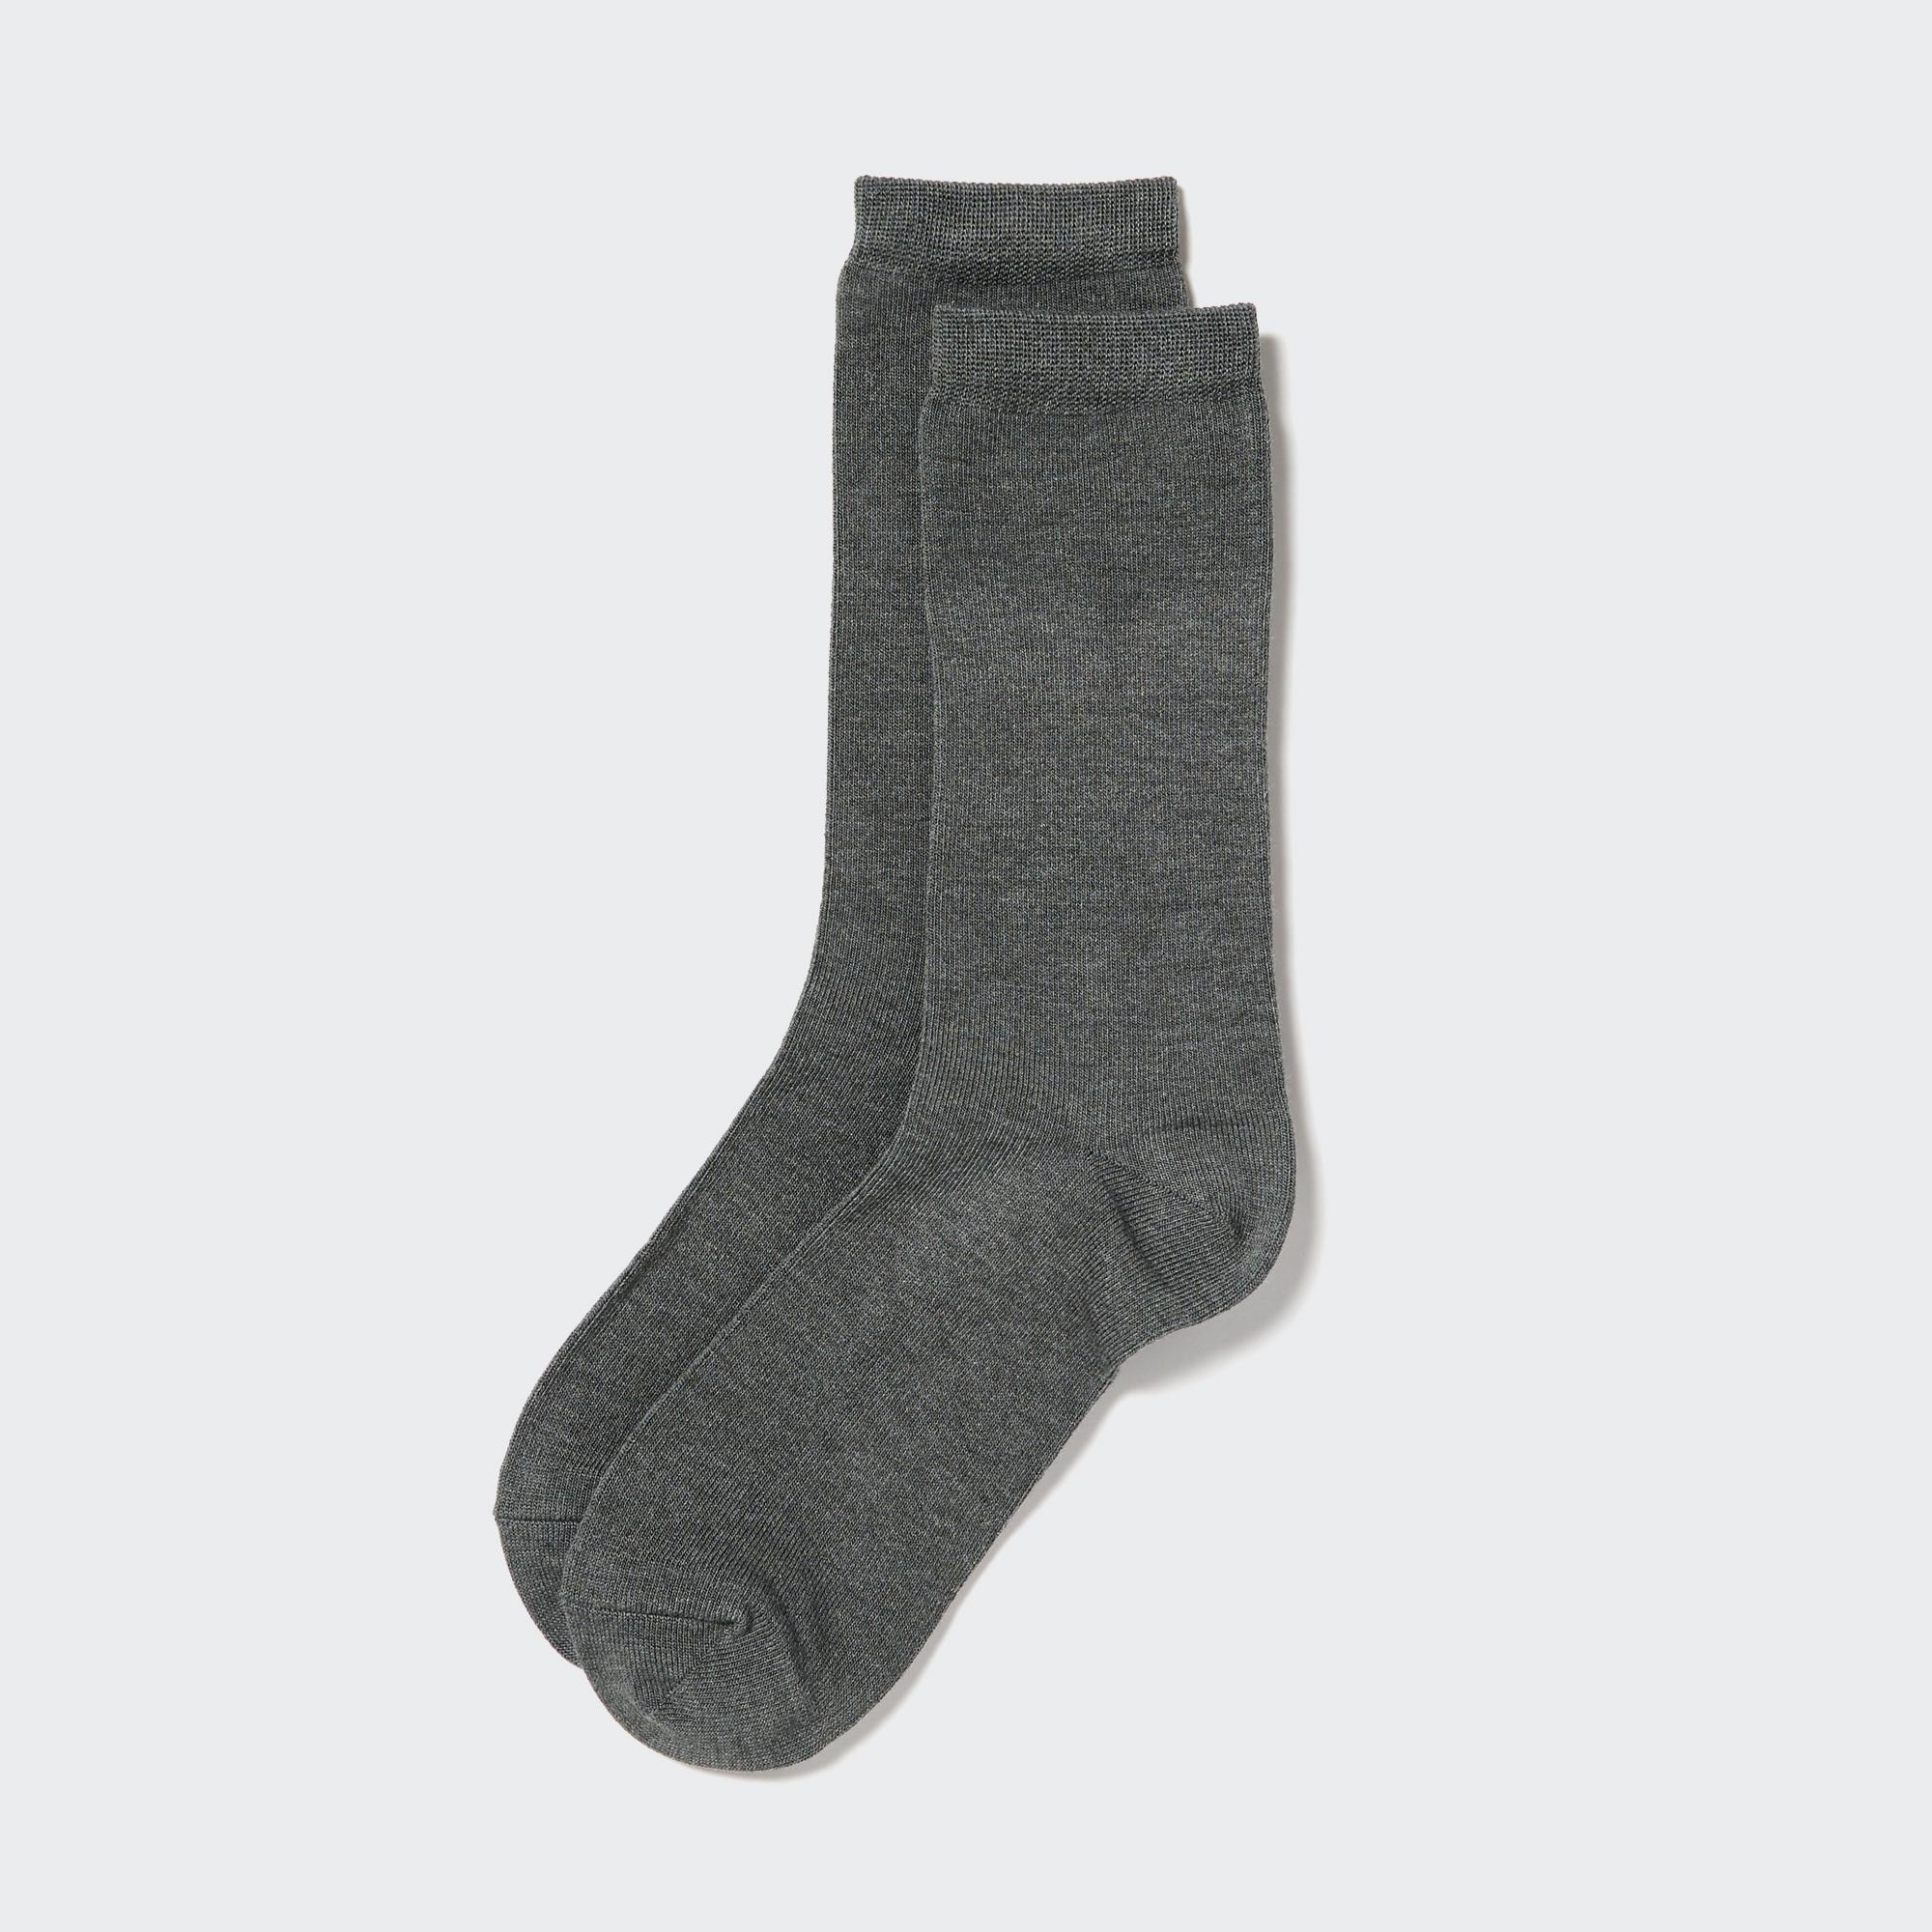 Mens Heavy Thick Wool Socks - Soft Warm Comfort Winter Crew Socks